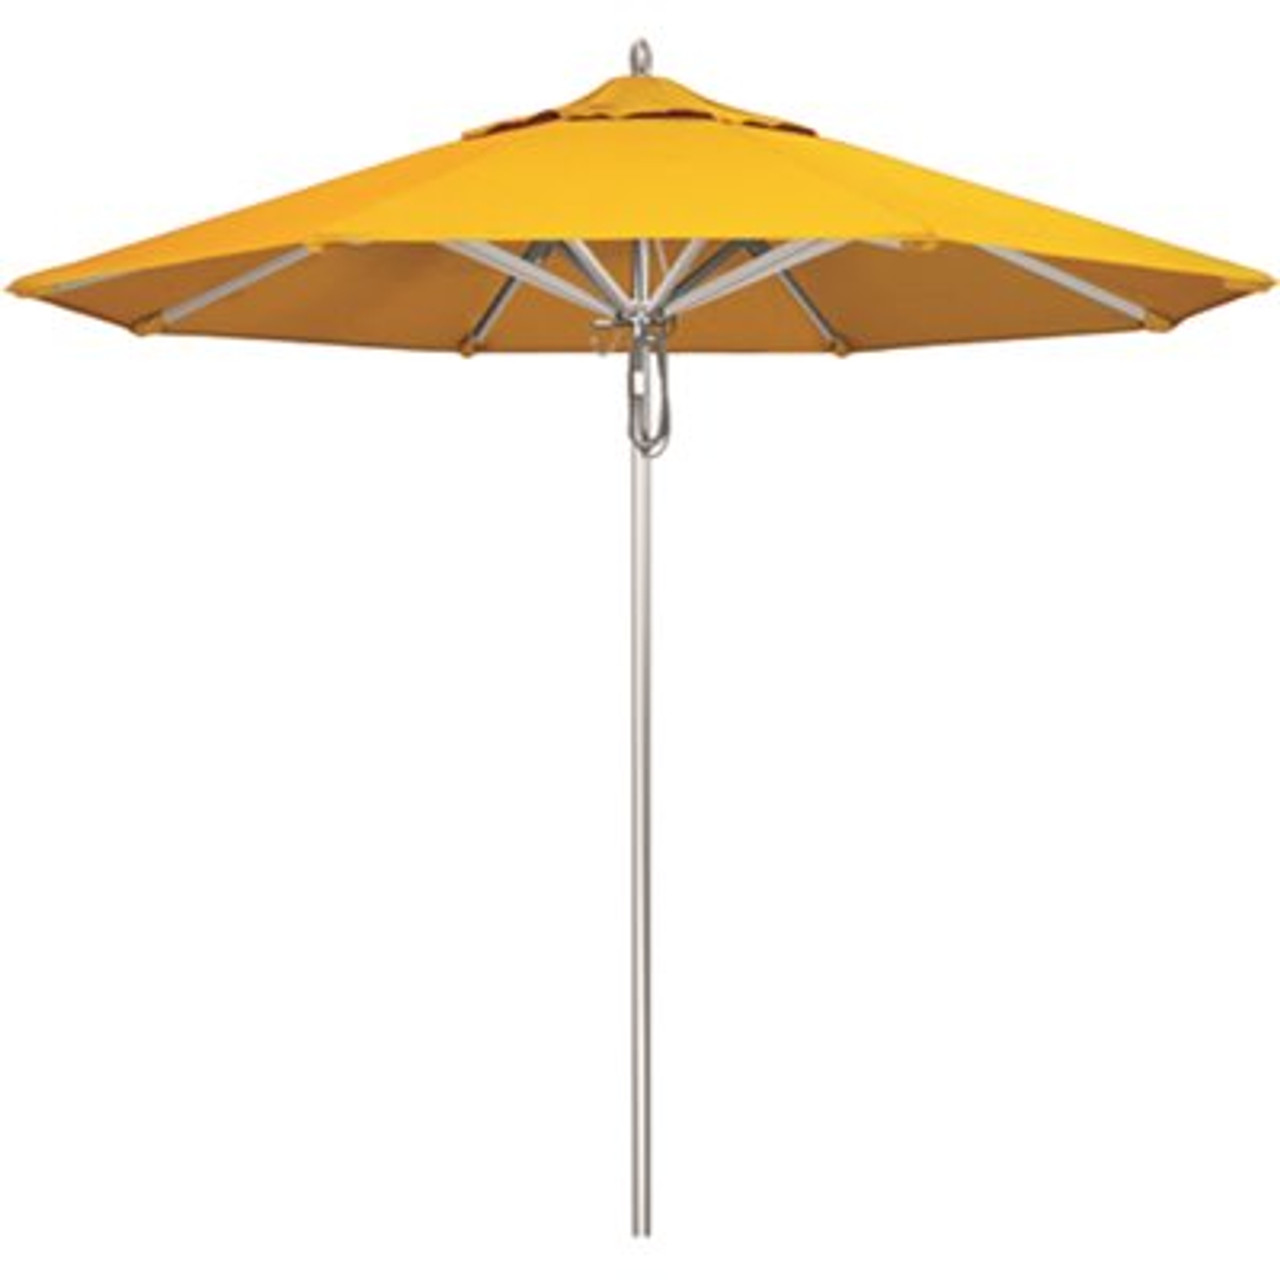 California Umbrella 9 ft. Silver Aluminum Commercial Market Patio Umbrella with Pulley Lift in Sunflower Yellow Sunbrella